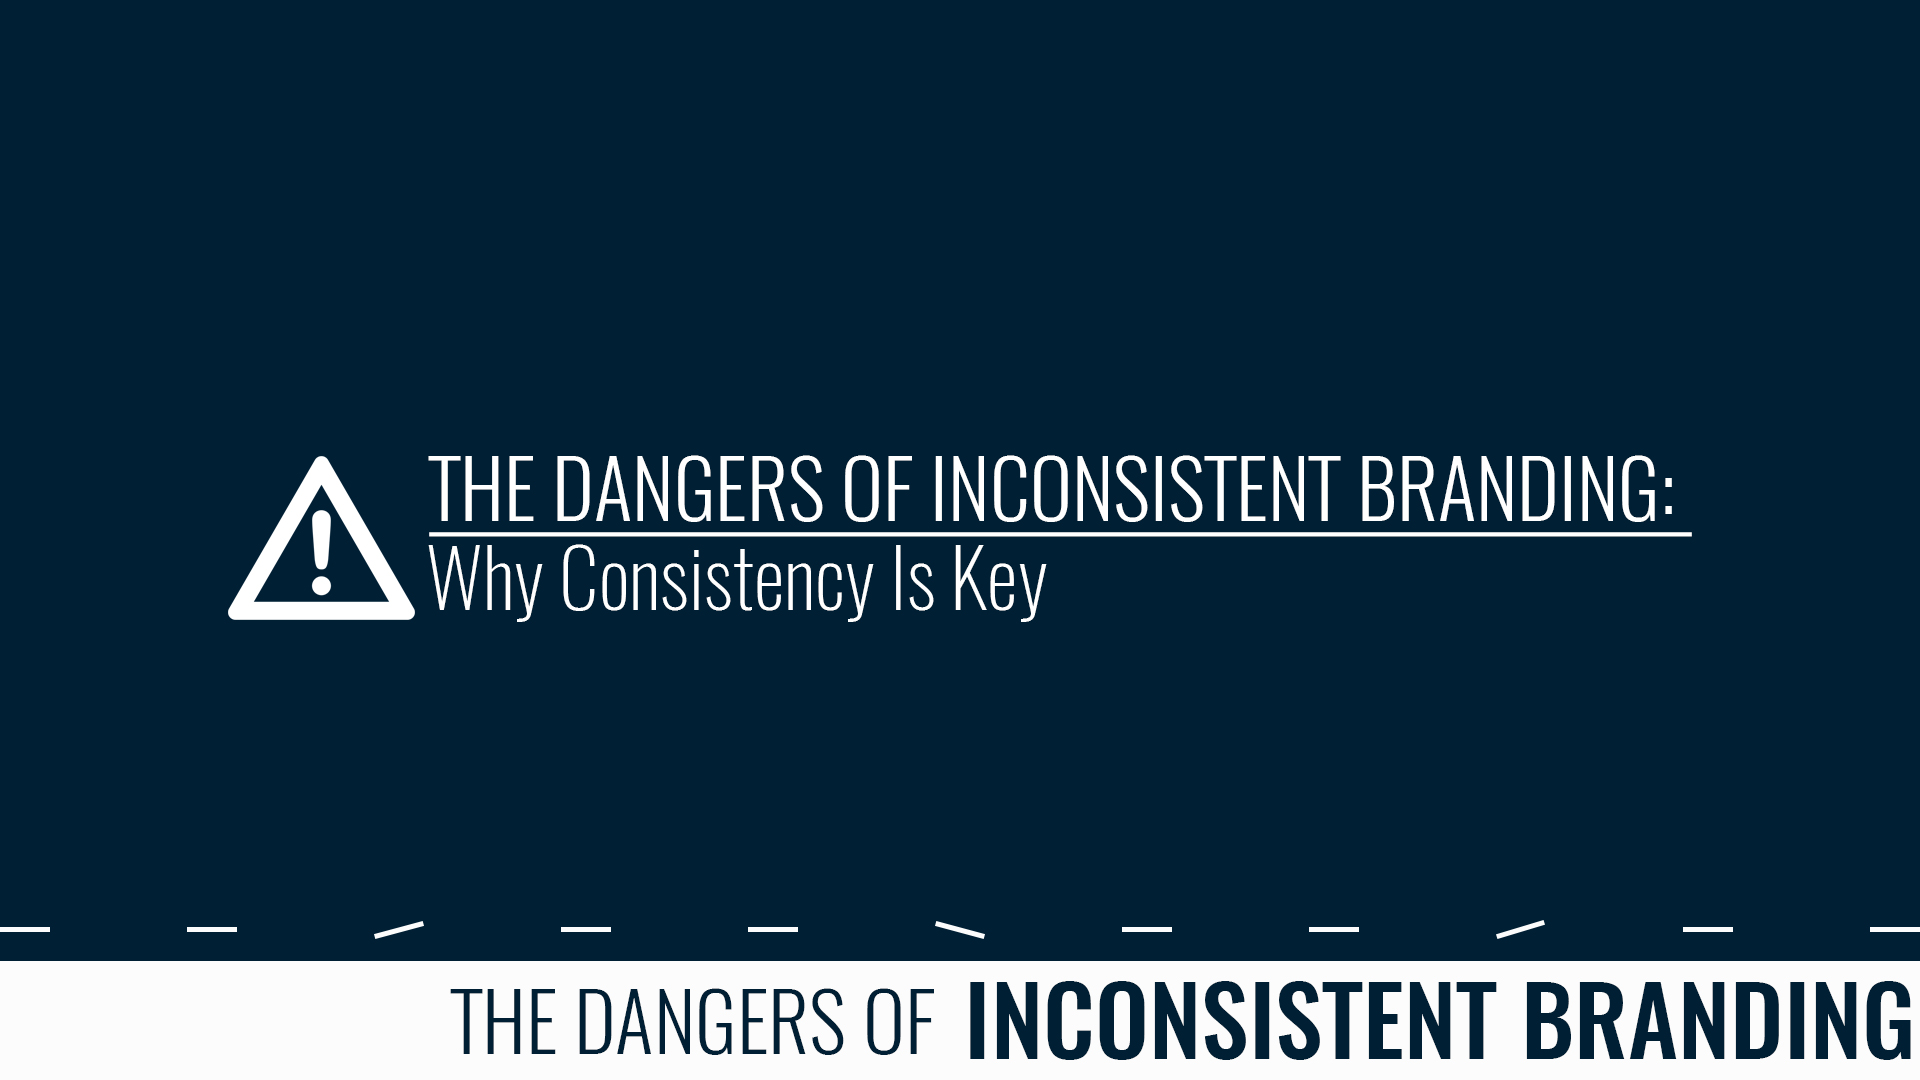 Brand Inconsistency - A Growth Killer